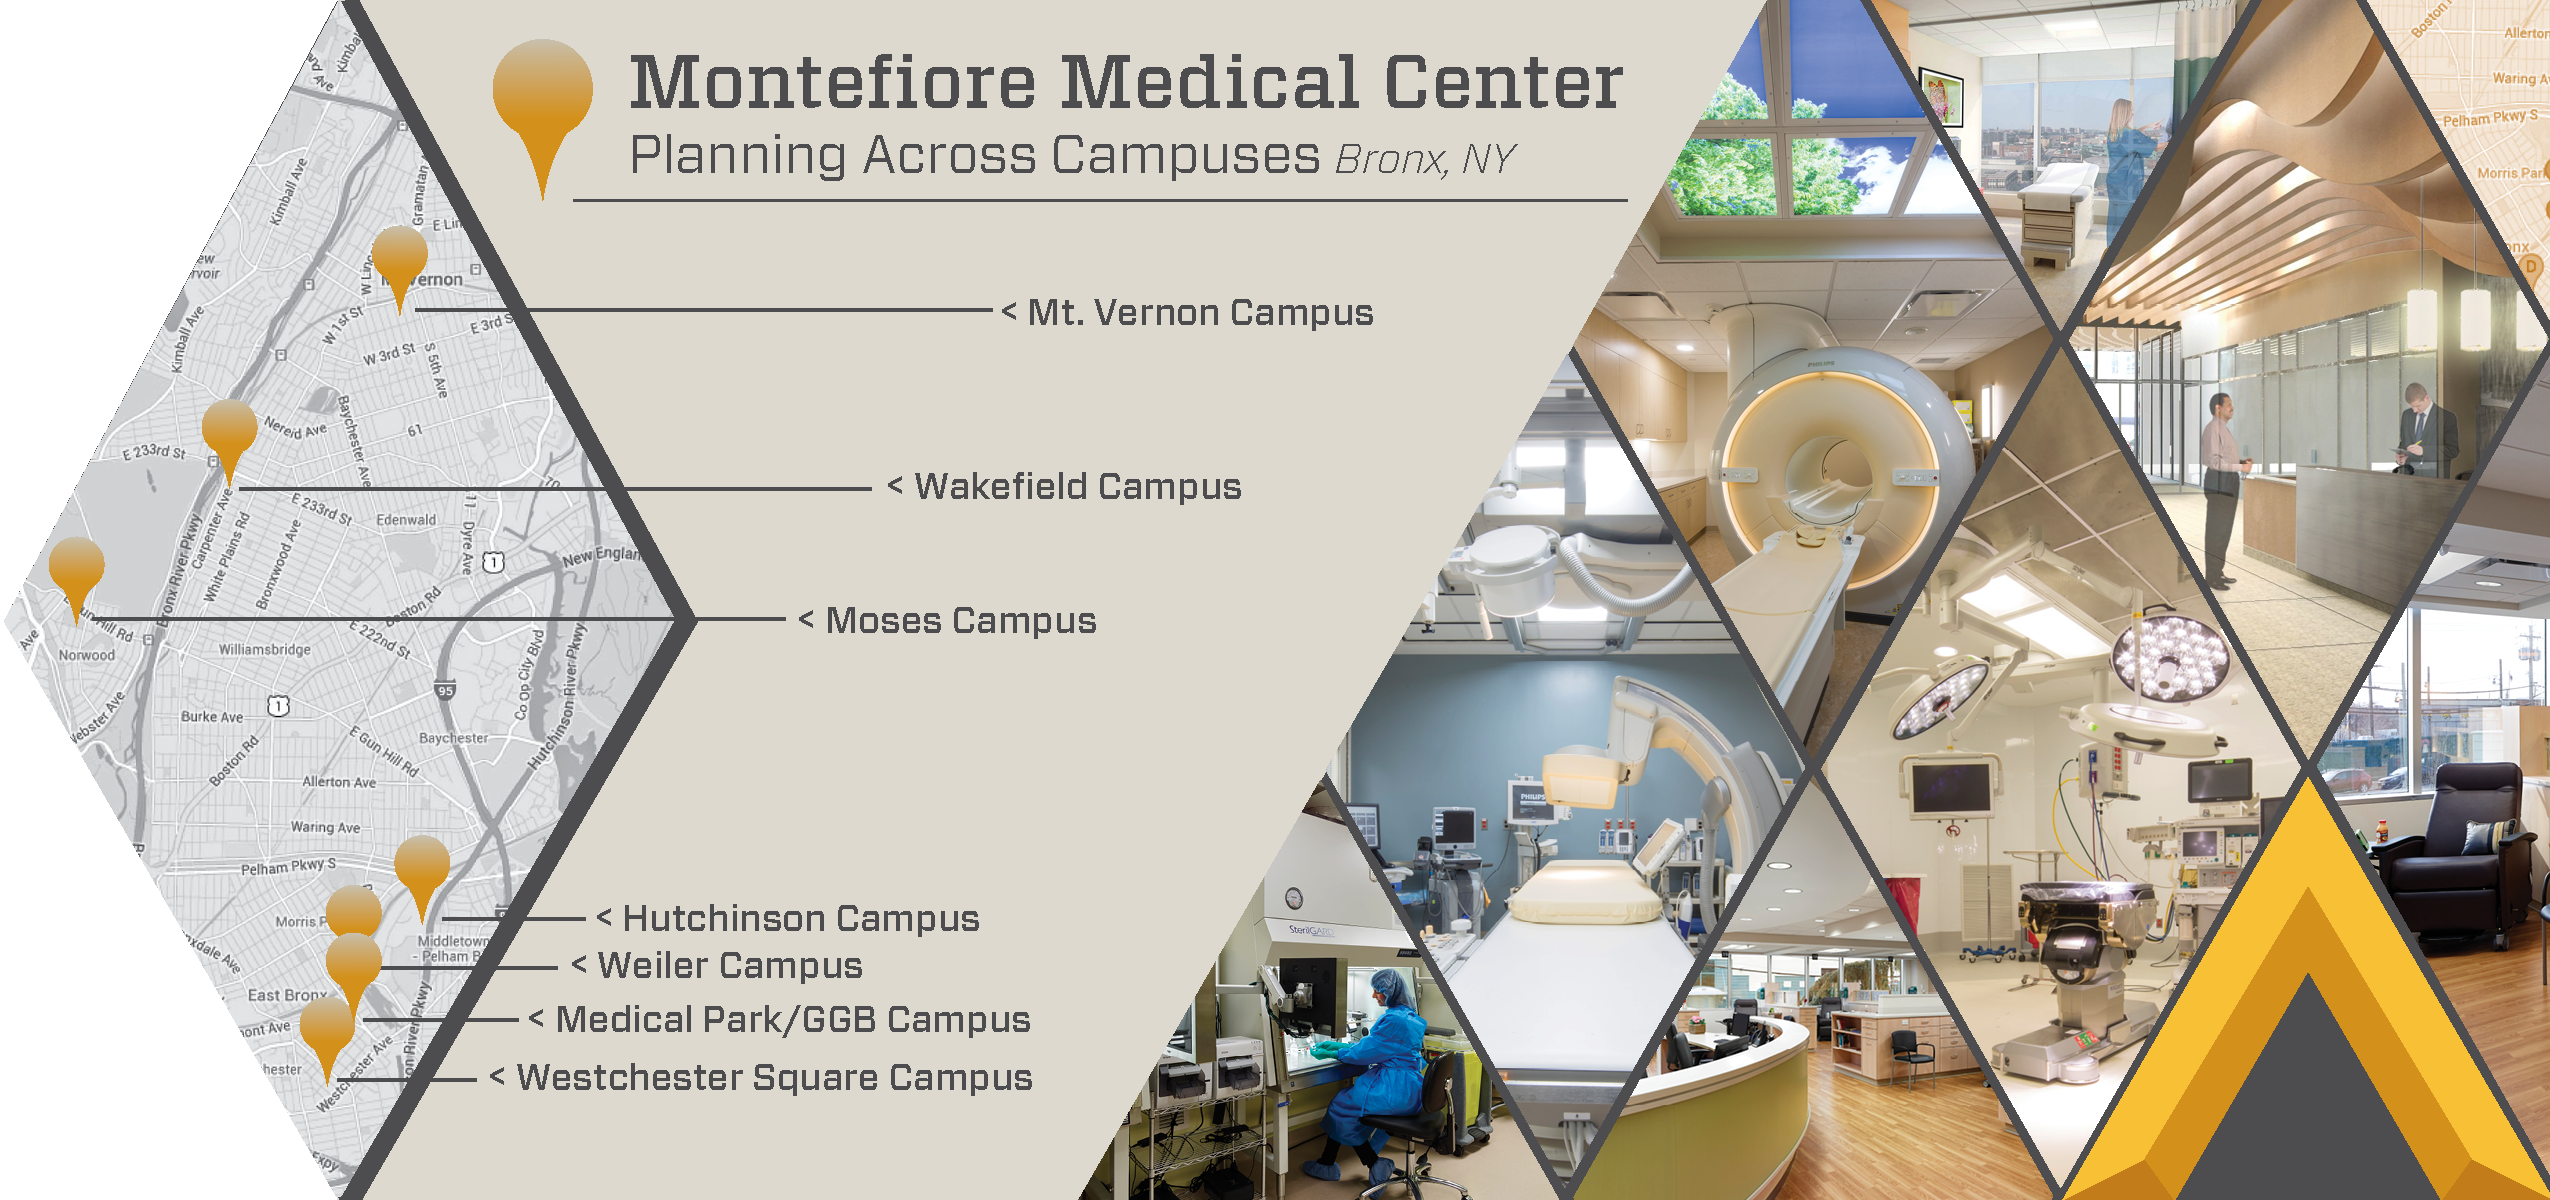 Montefiore Medical Center Locations Map